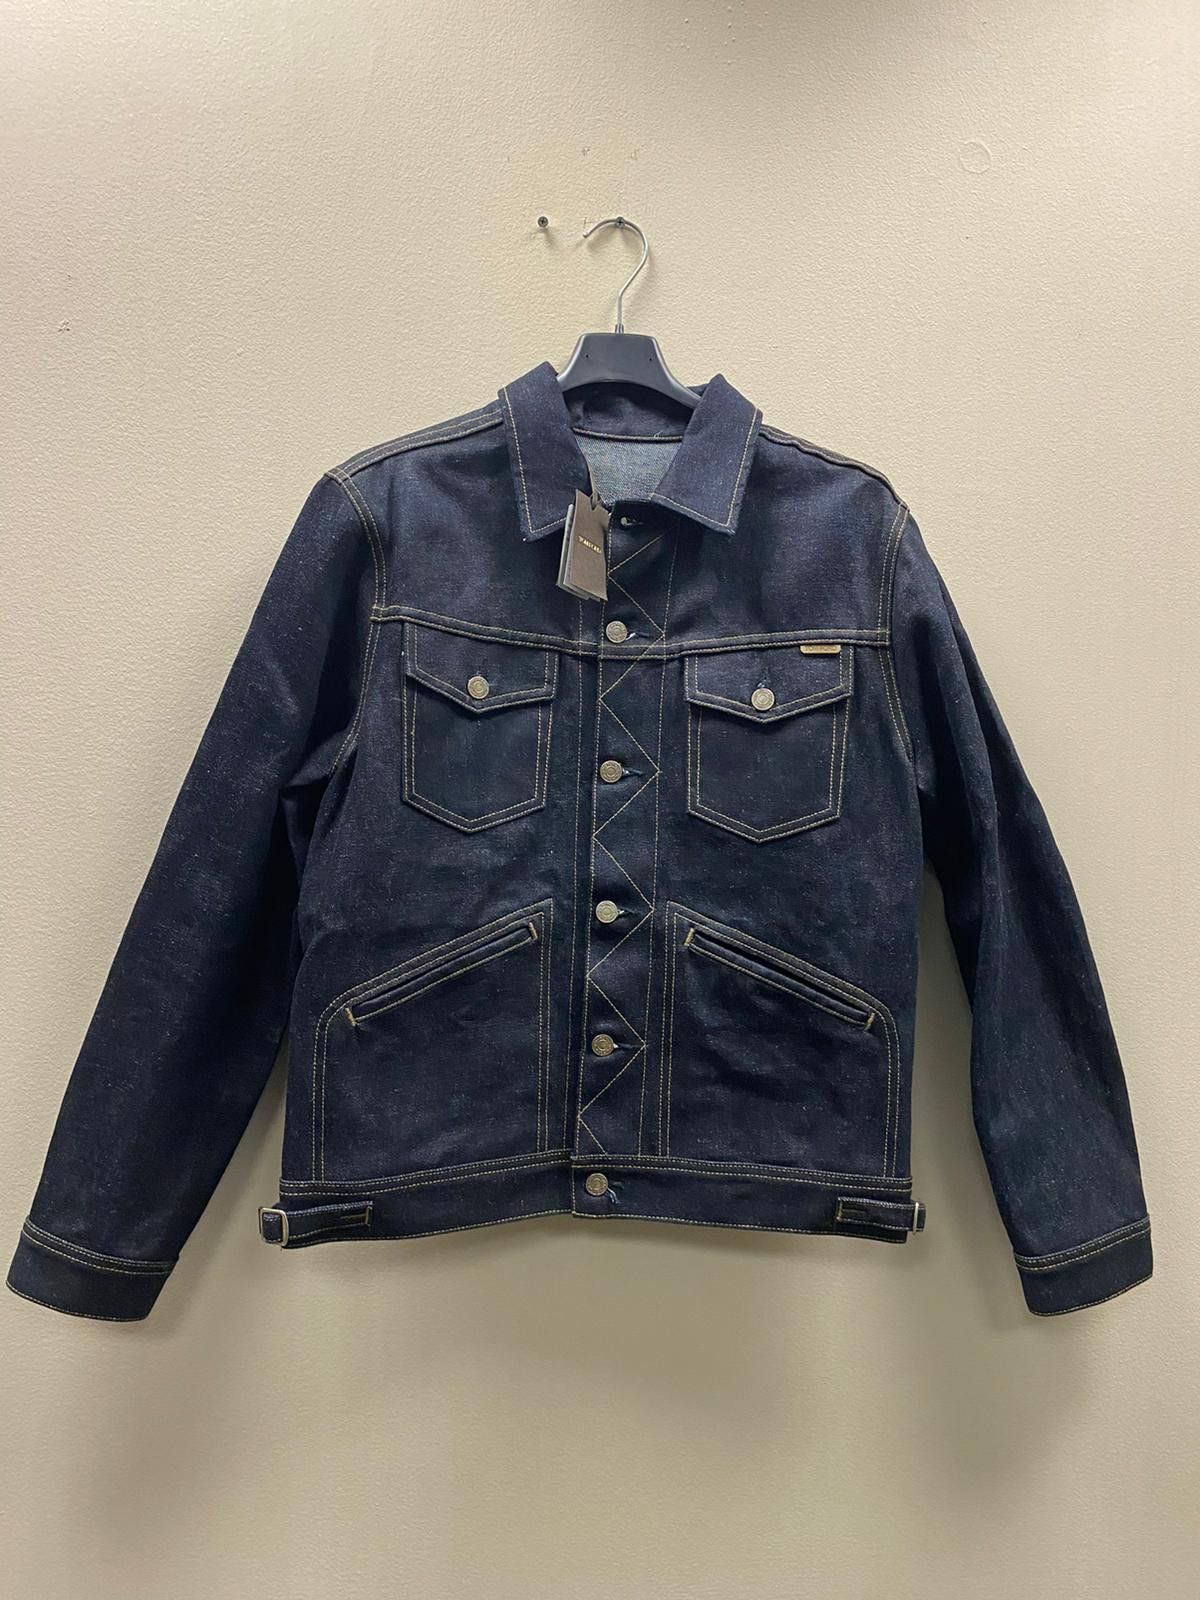 Tom Ford Classic Denim Jacket in Indigo Size US M / EU 48-50 / 2 - 9 Thumbnail